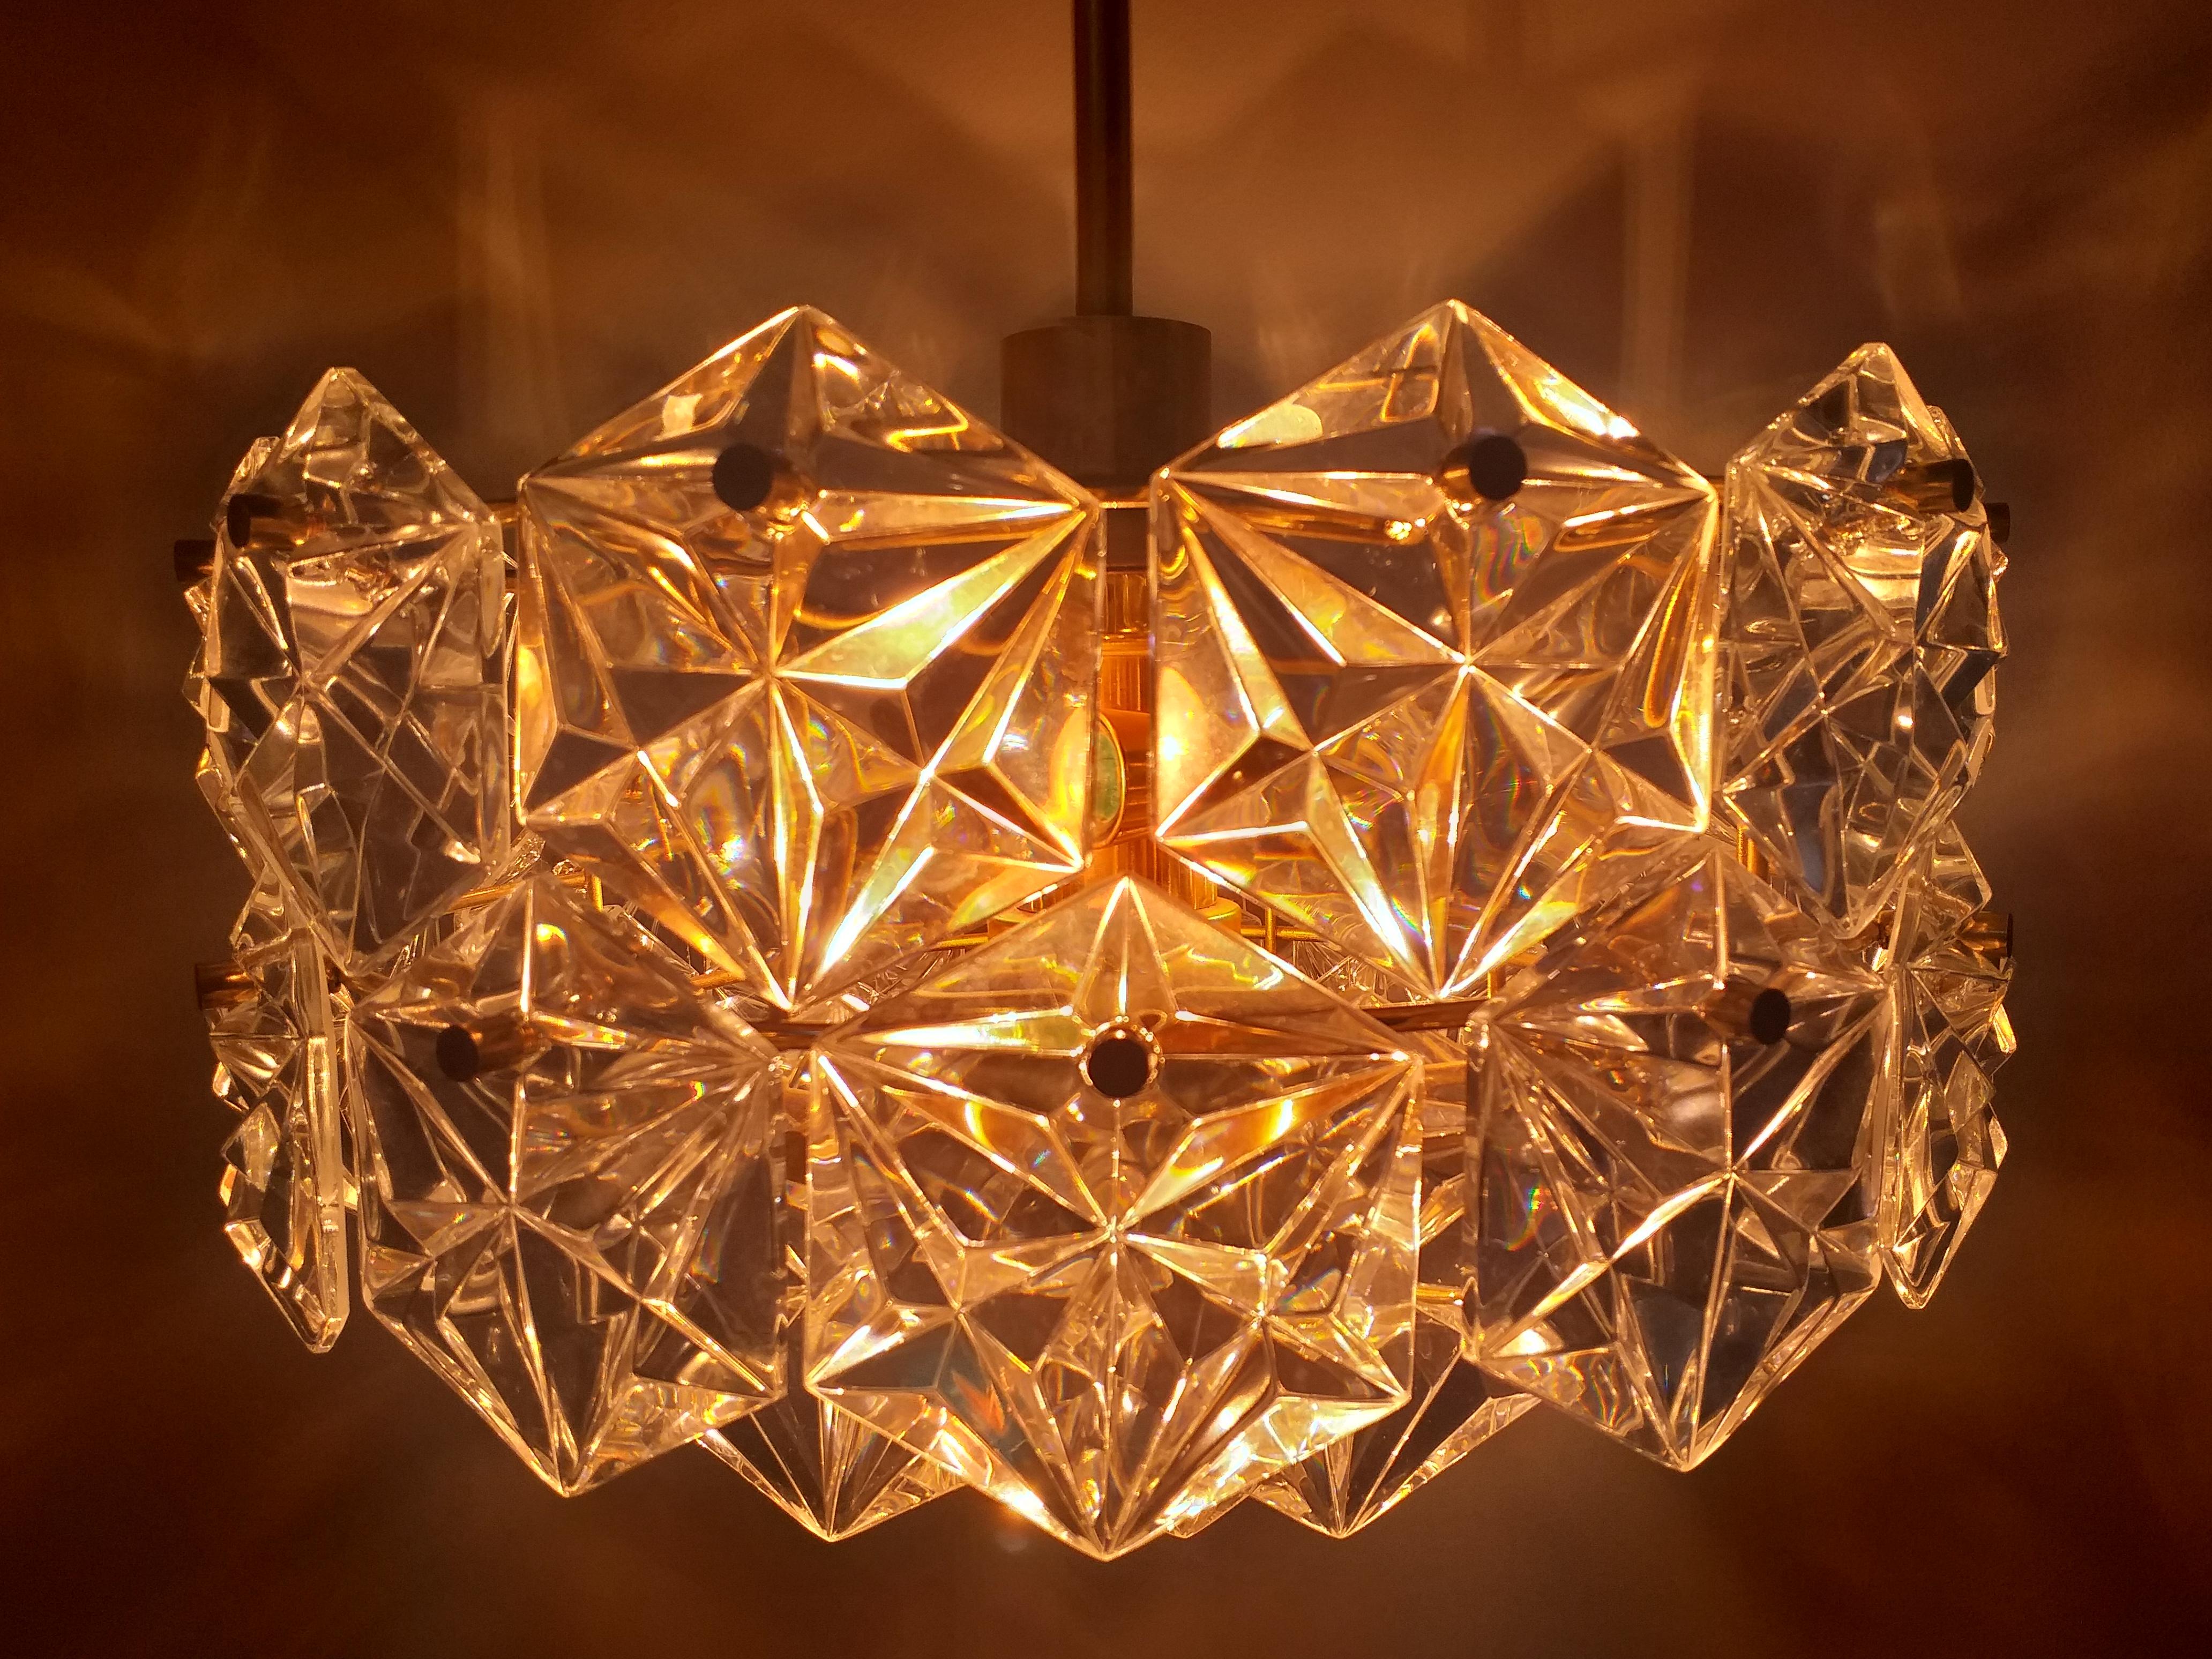 chrome crystal chandelier